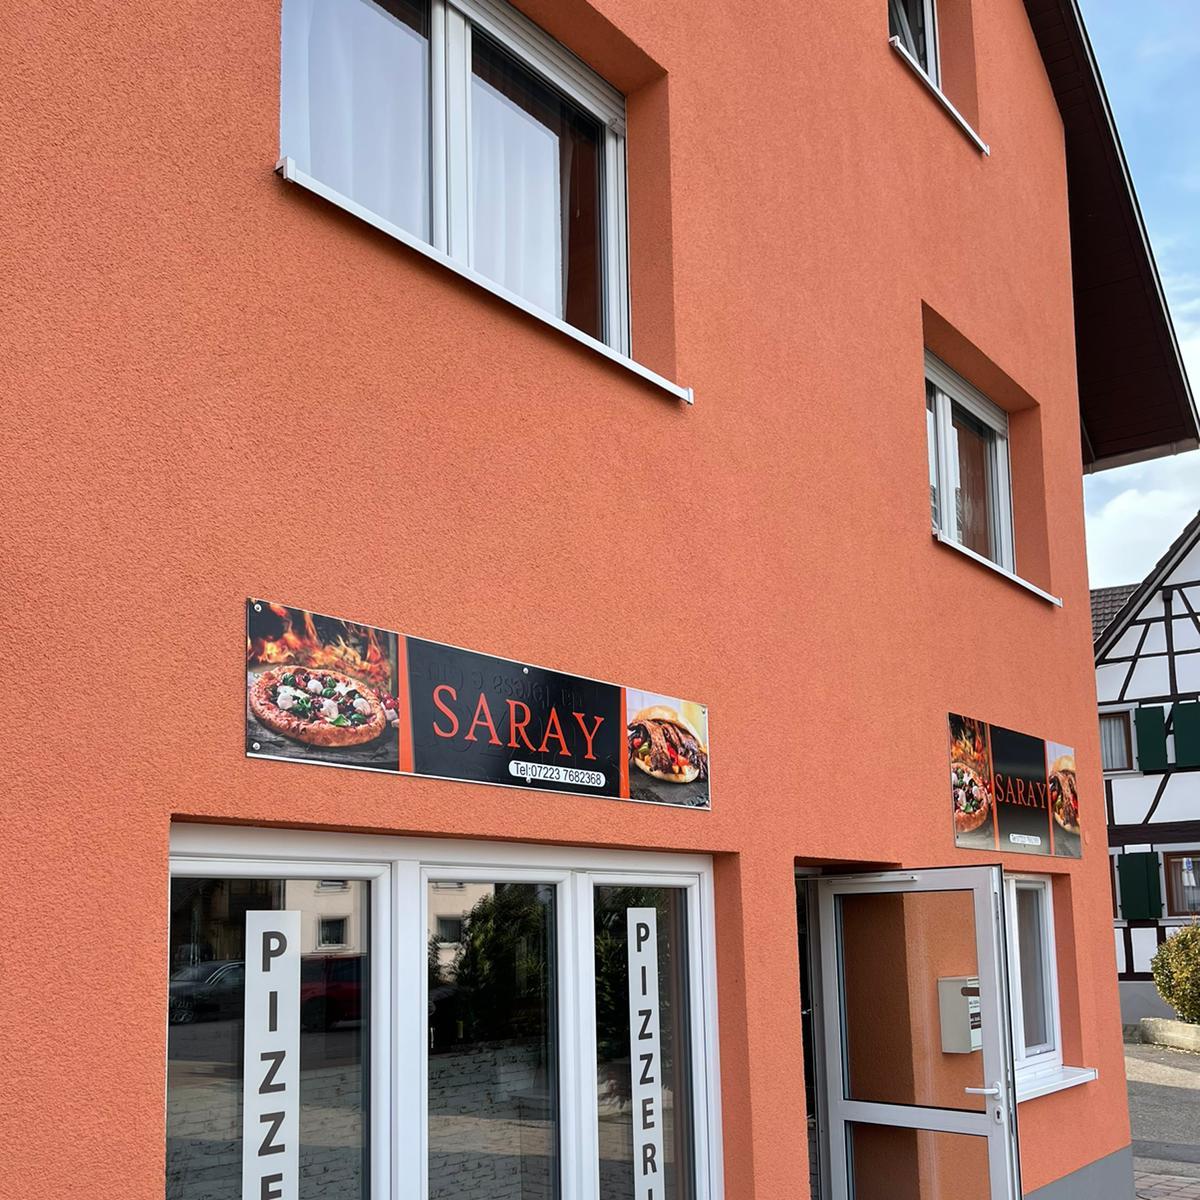 Restaurant "Saray Kebap & Pizza" in Ottersweier